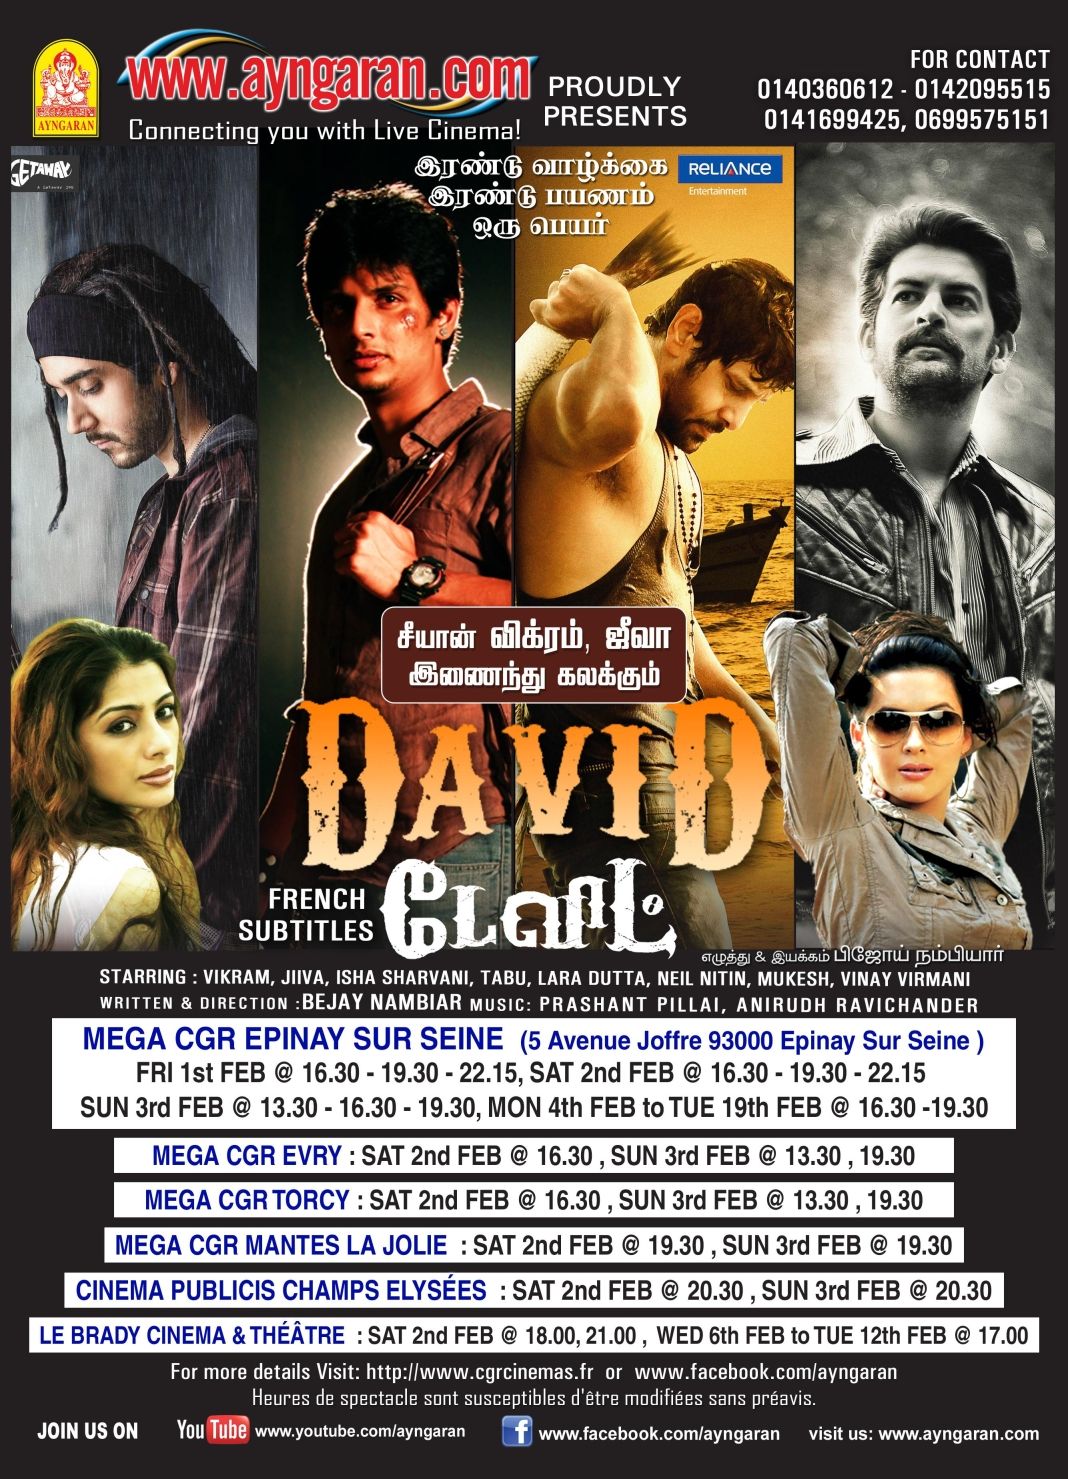 DAVID Film Paris Show time Poster | Picture 370588